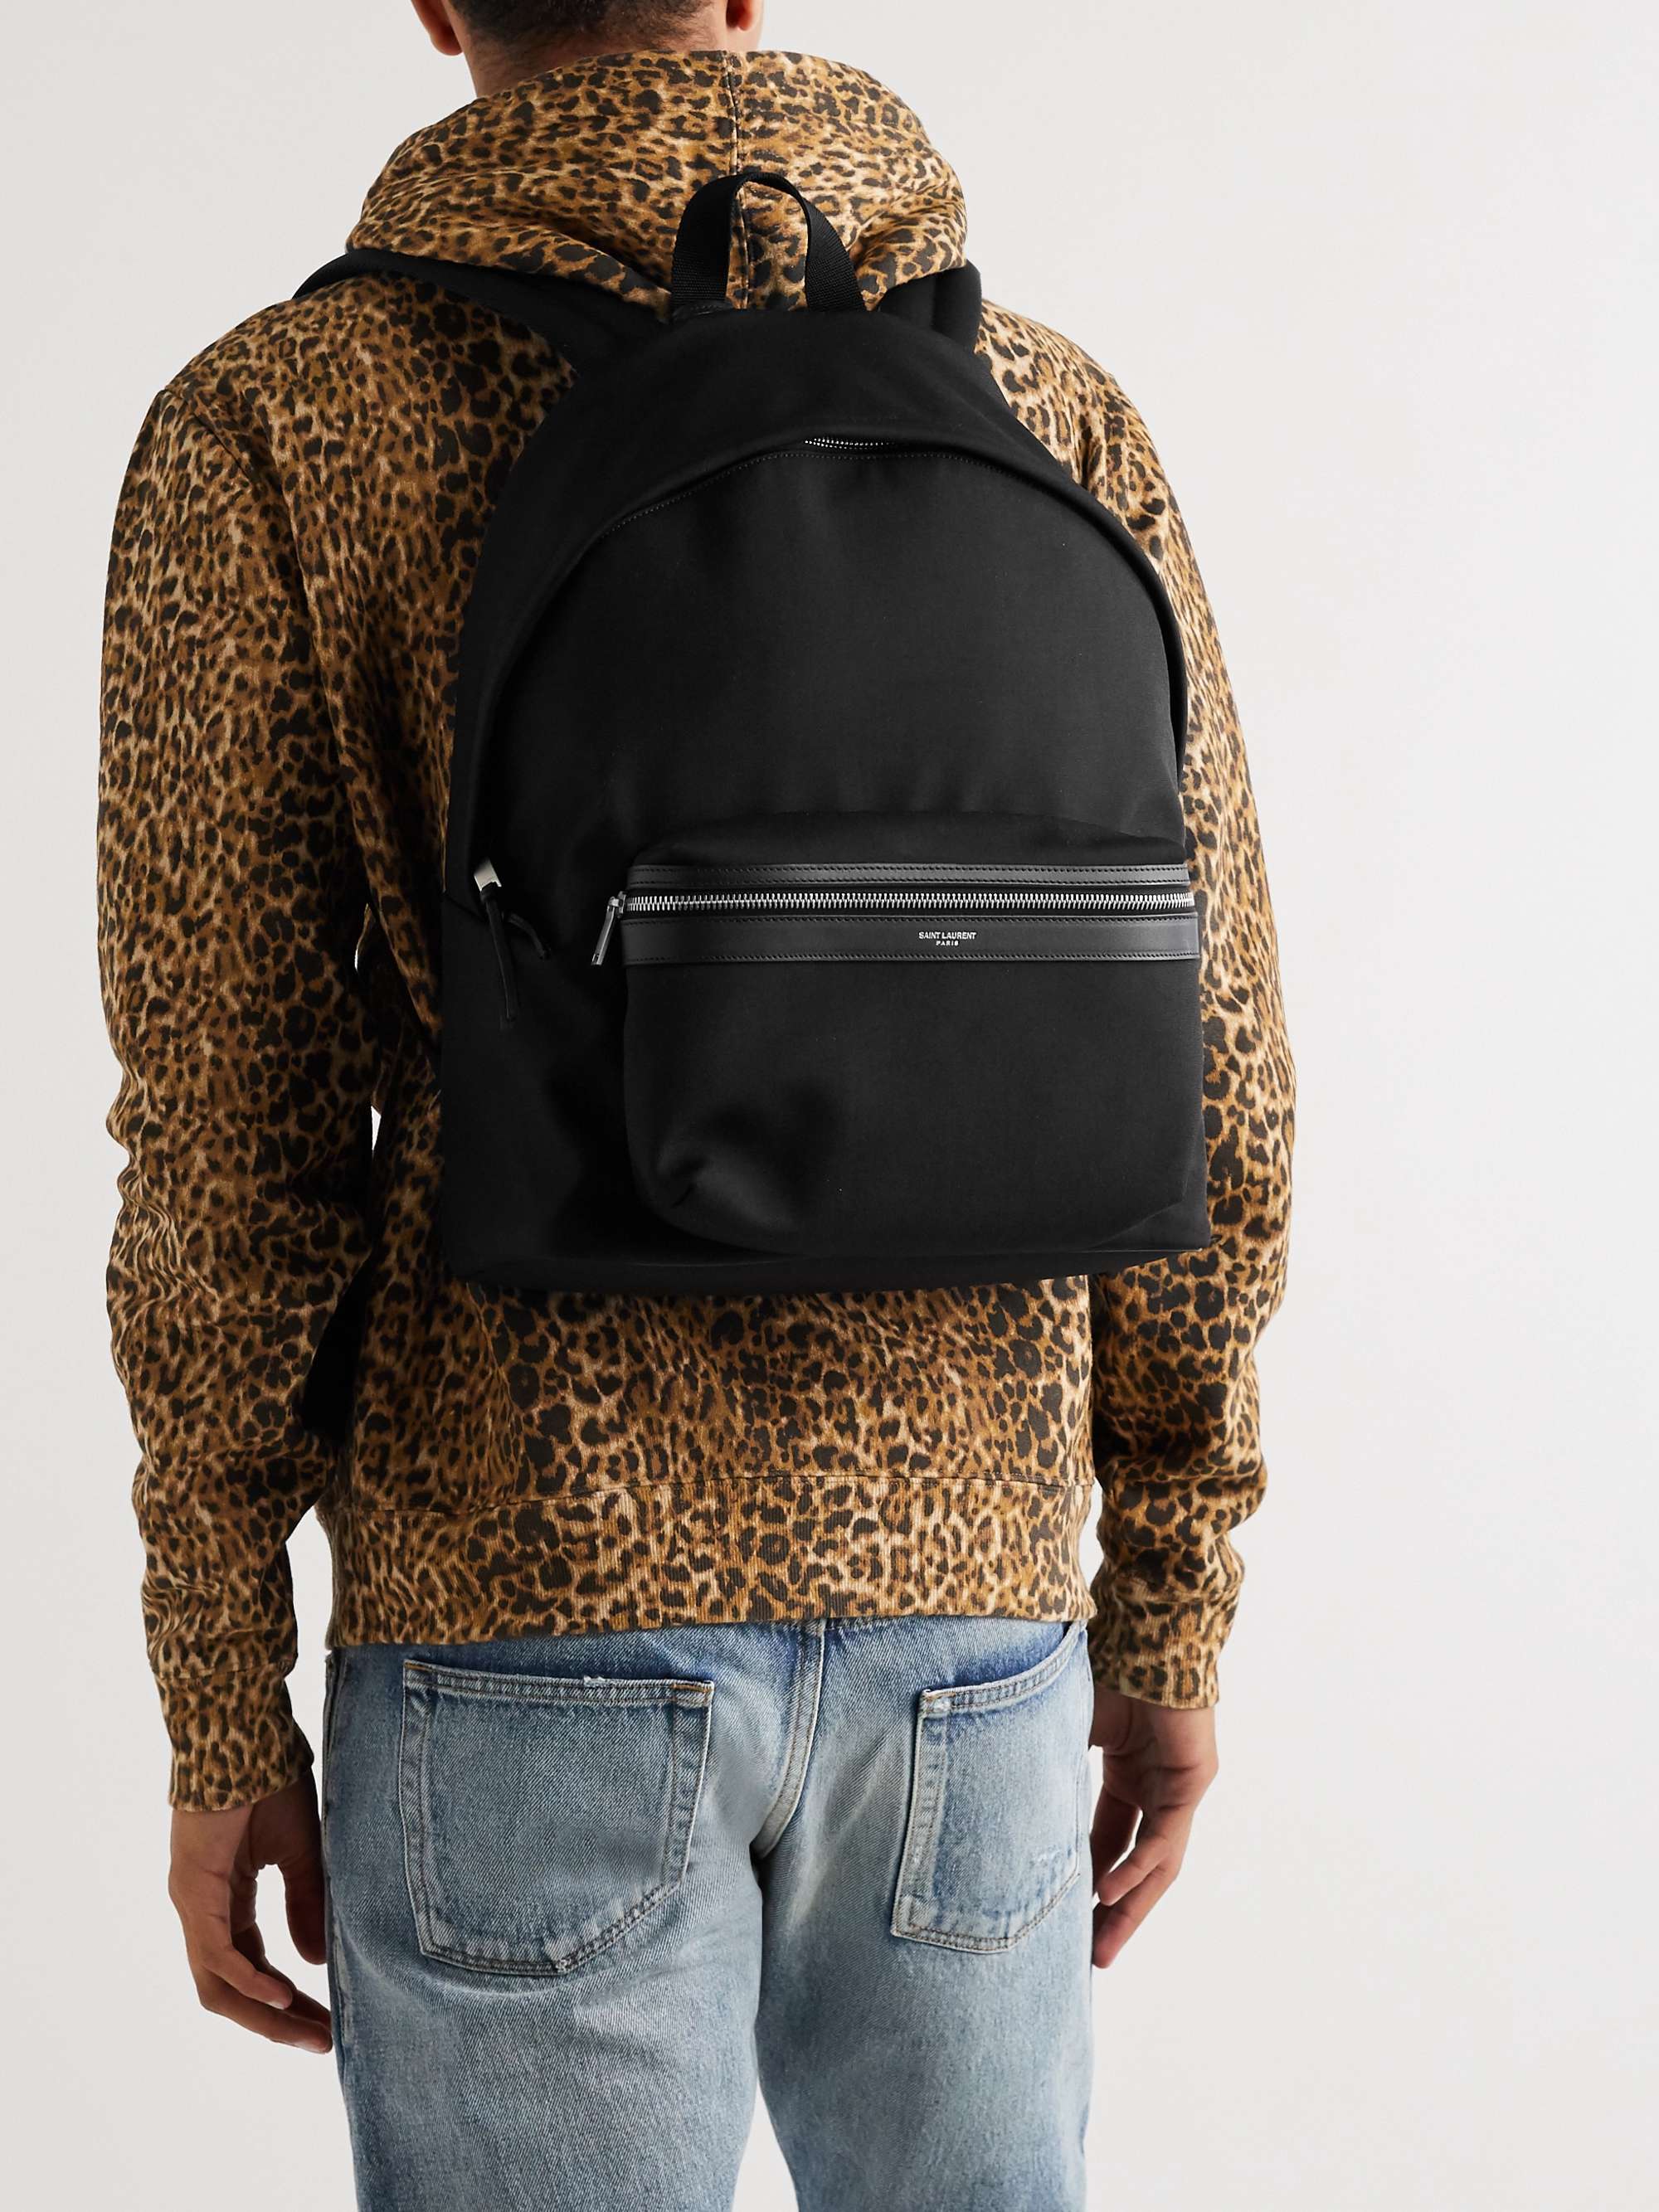 Saint Laurent Biker Backpack - Couture USA